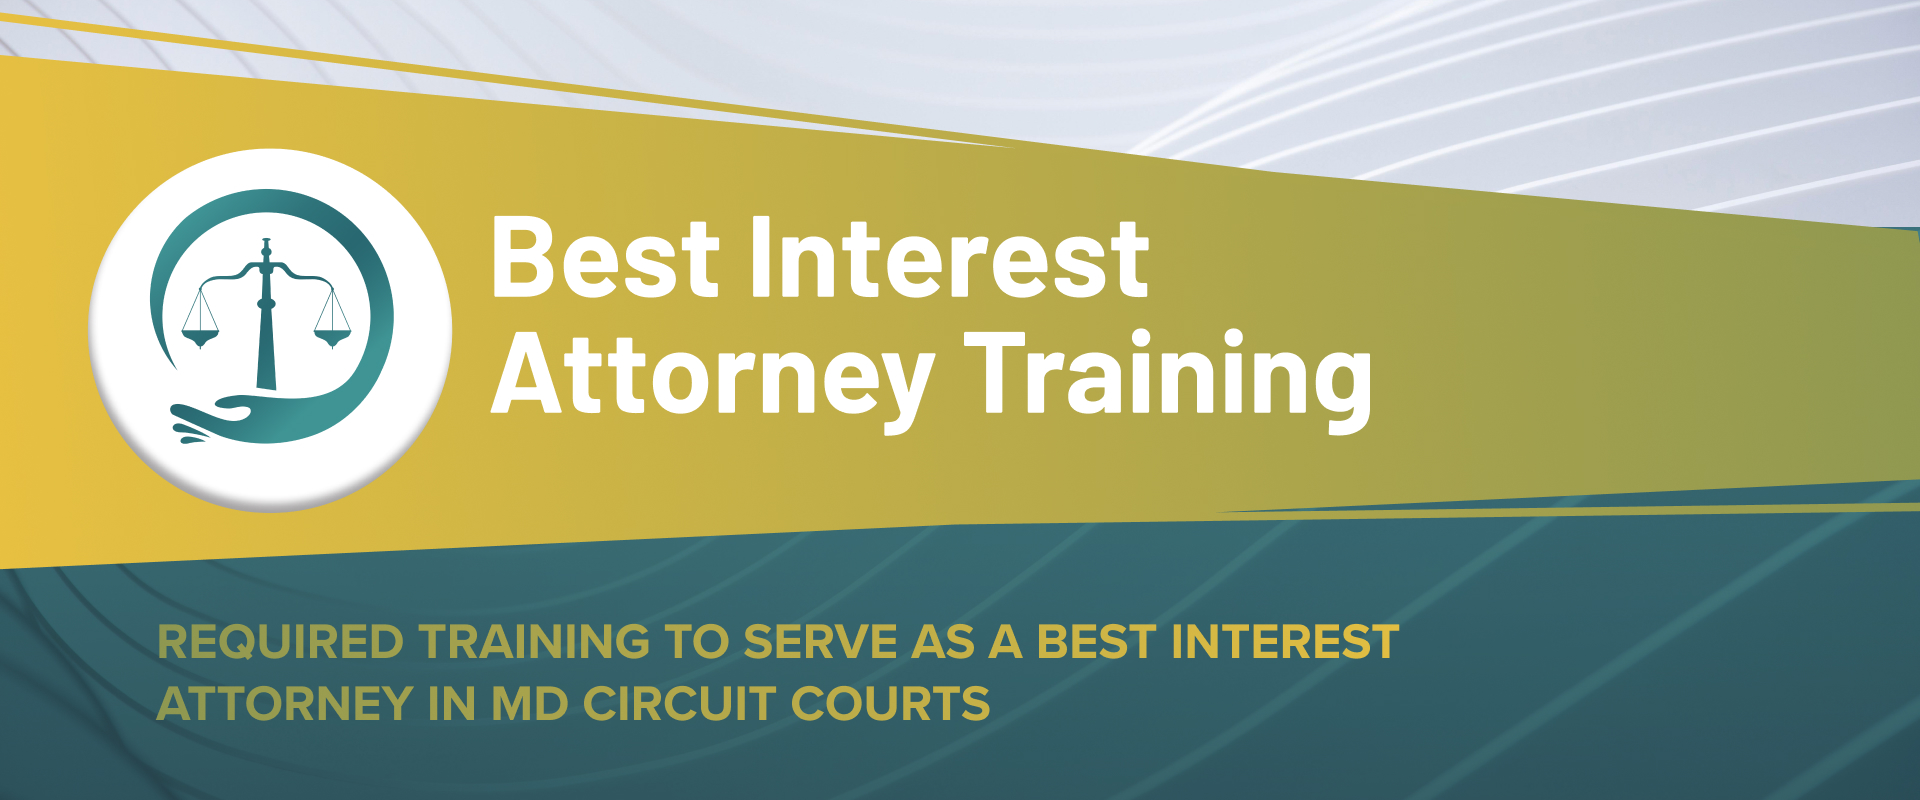 Best Interest Attorney Training logo justice scales